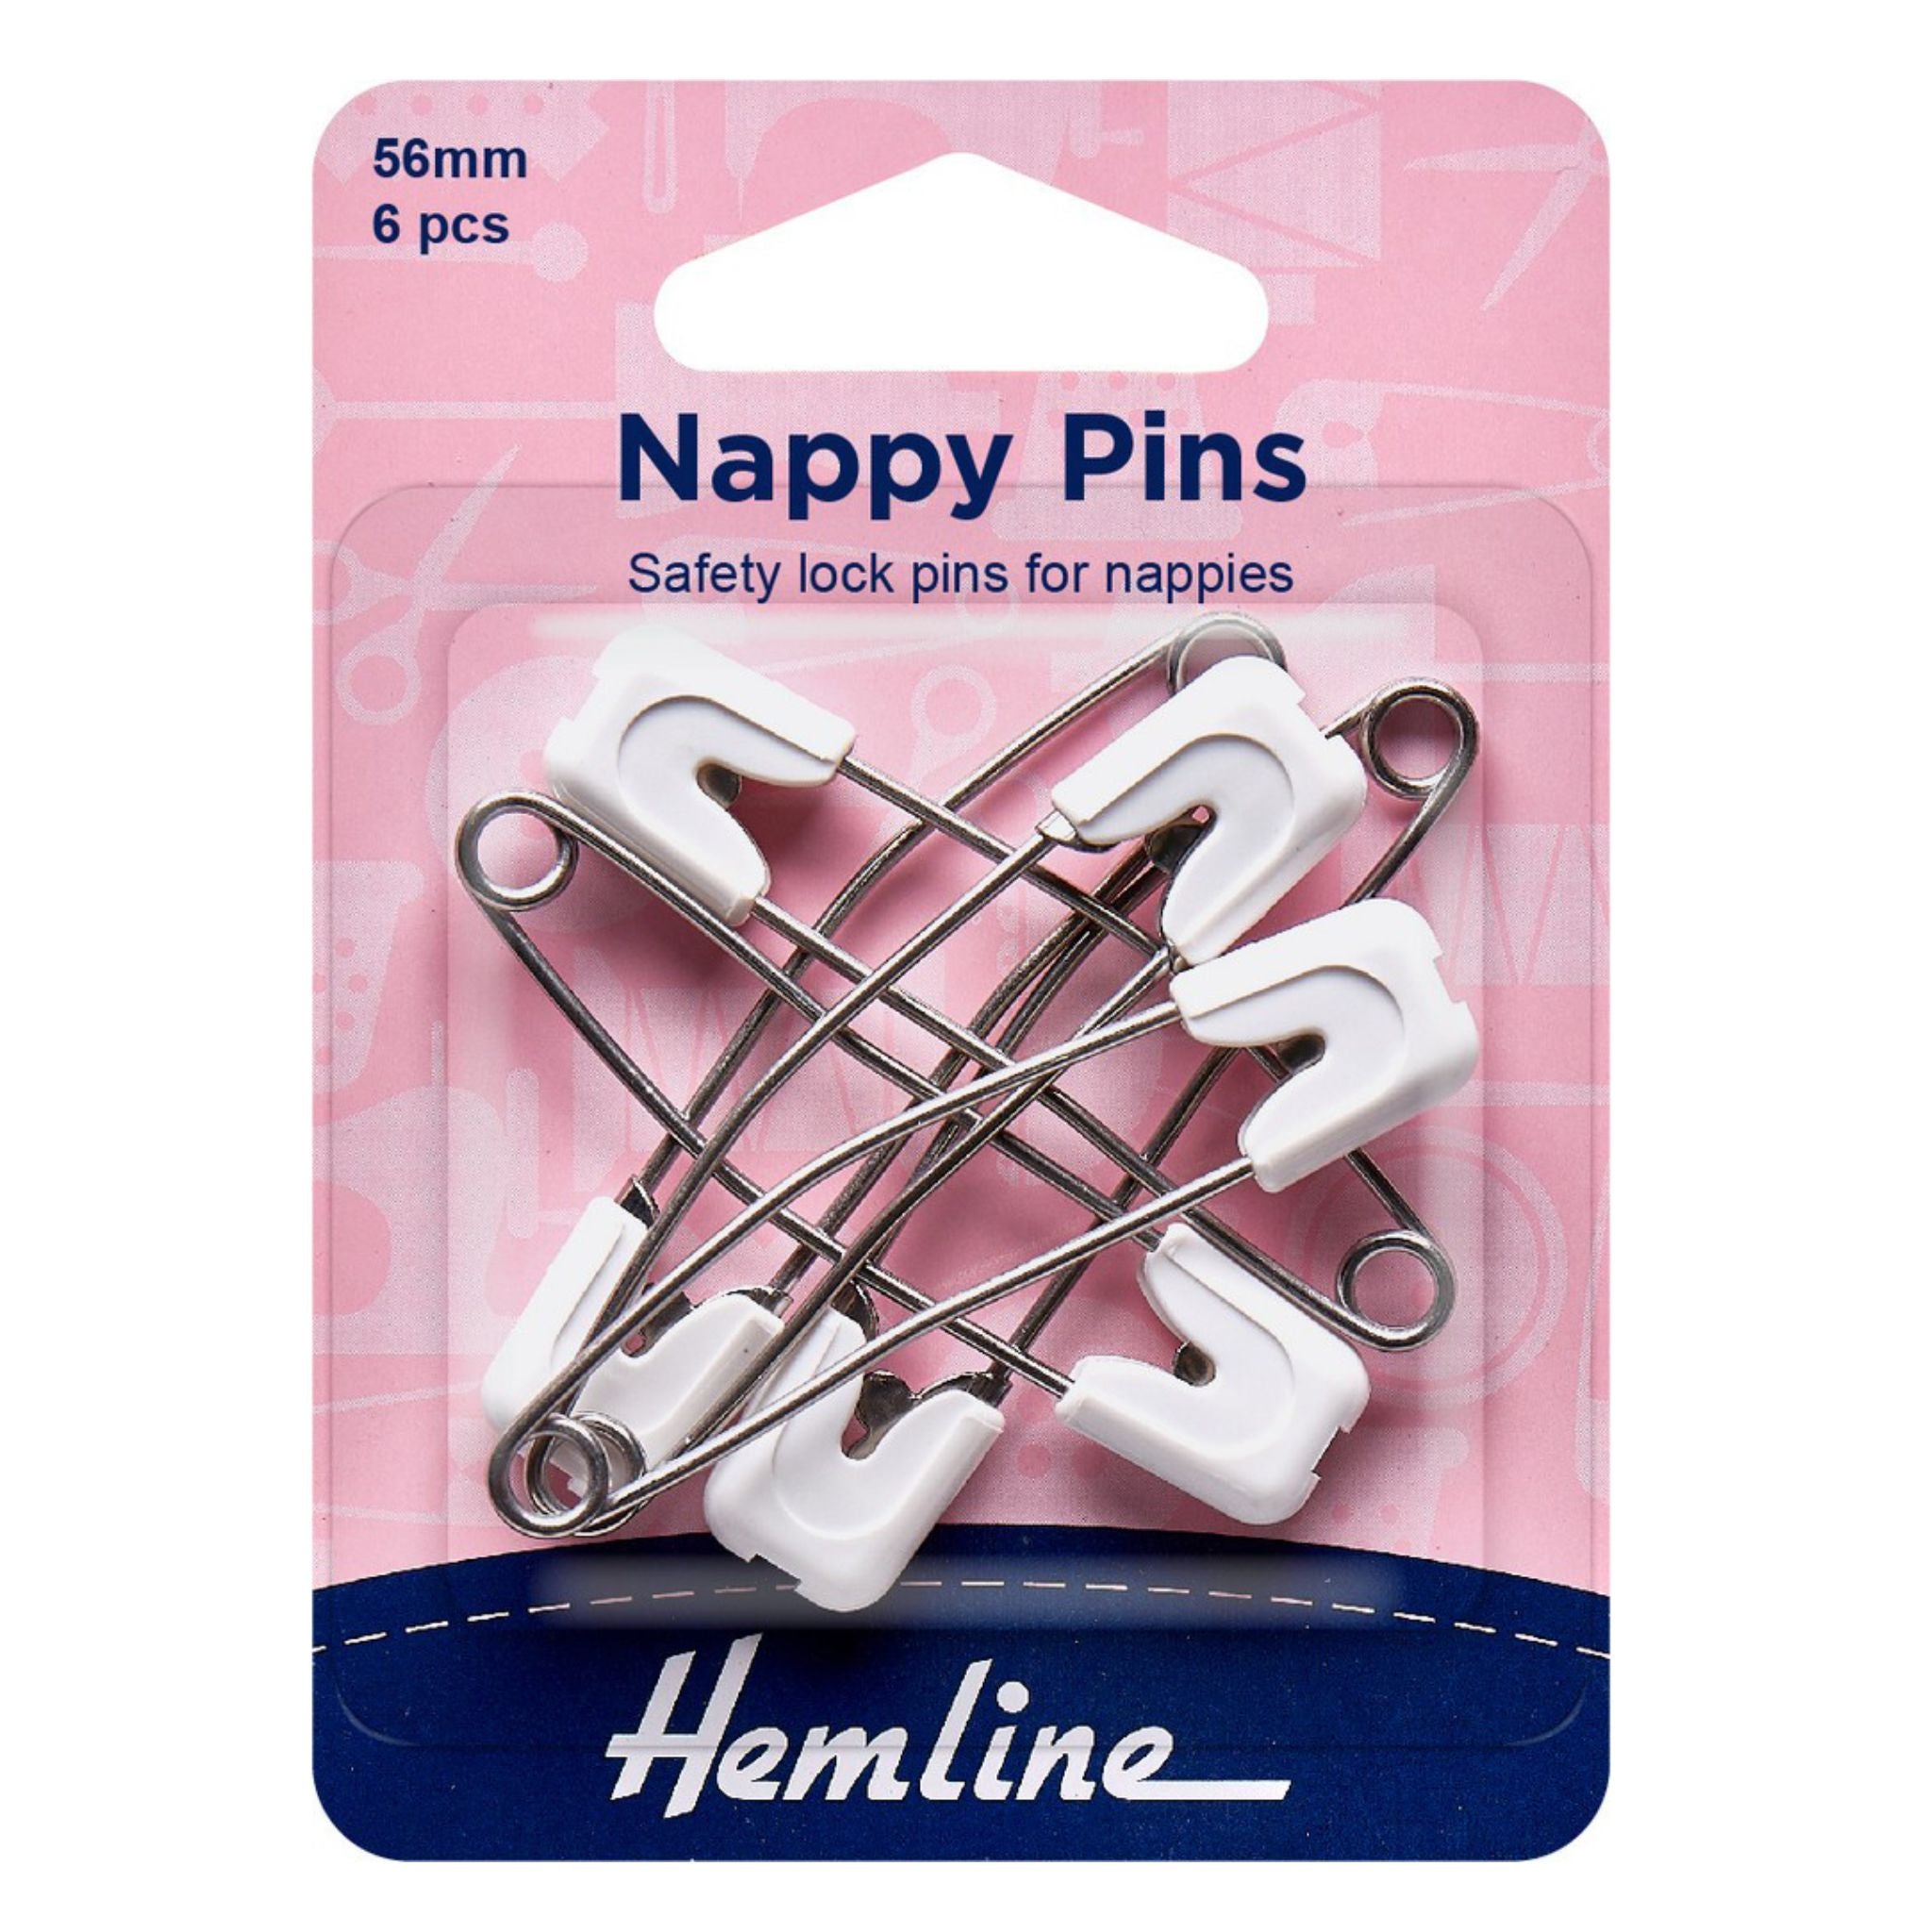 Hemline nappy pins - 6 pack